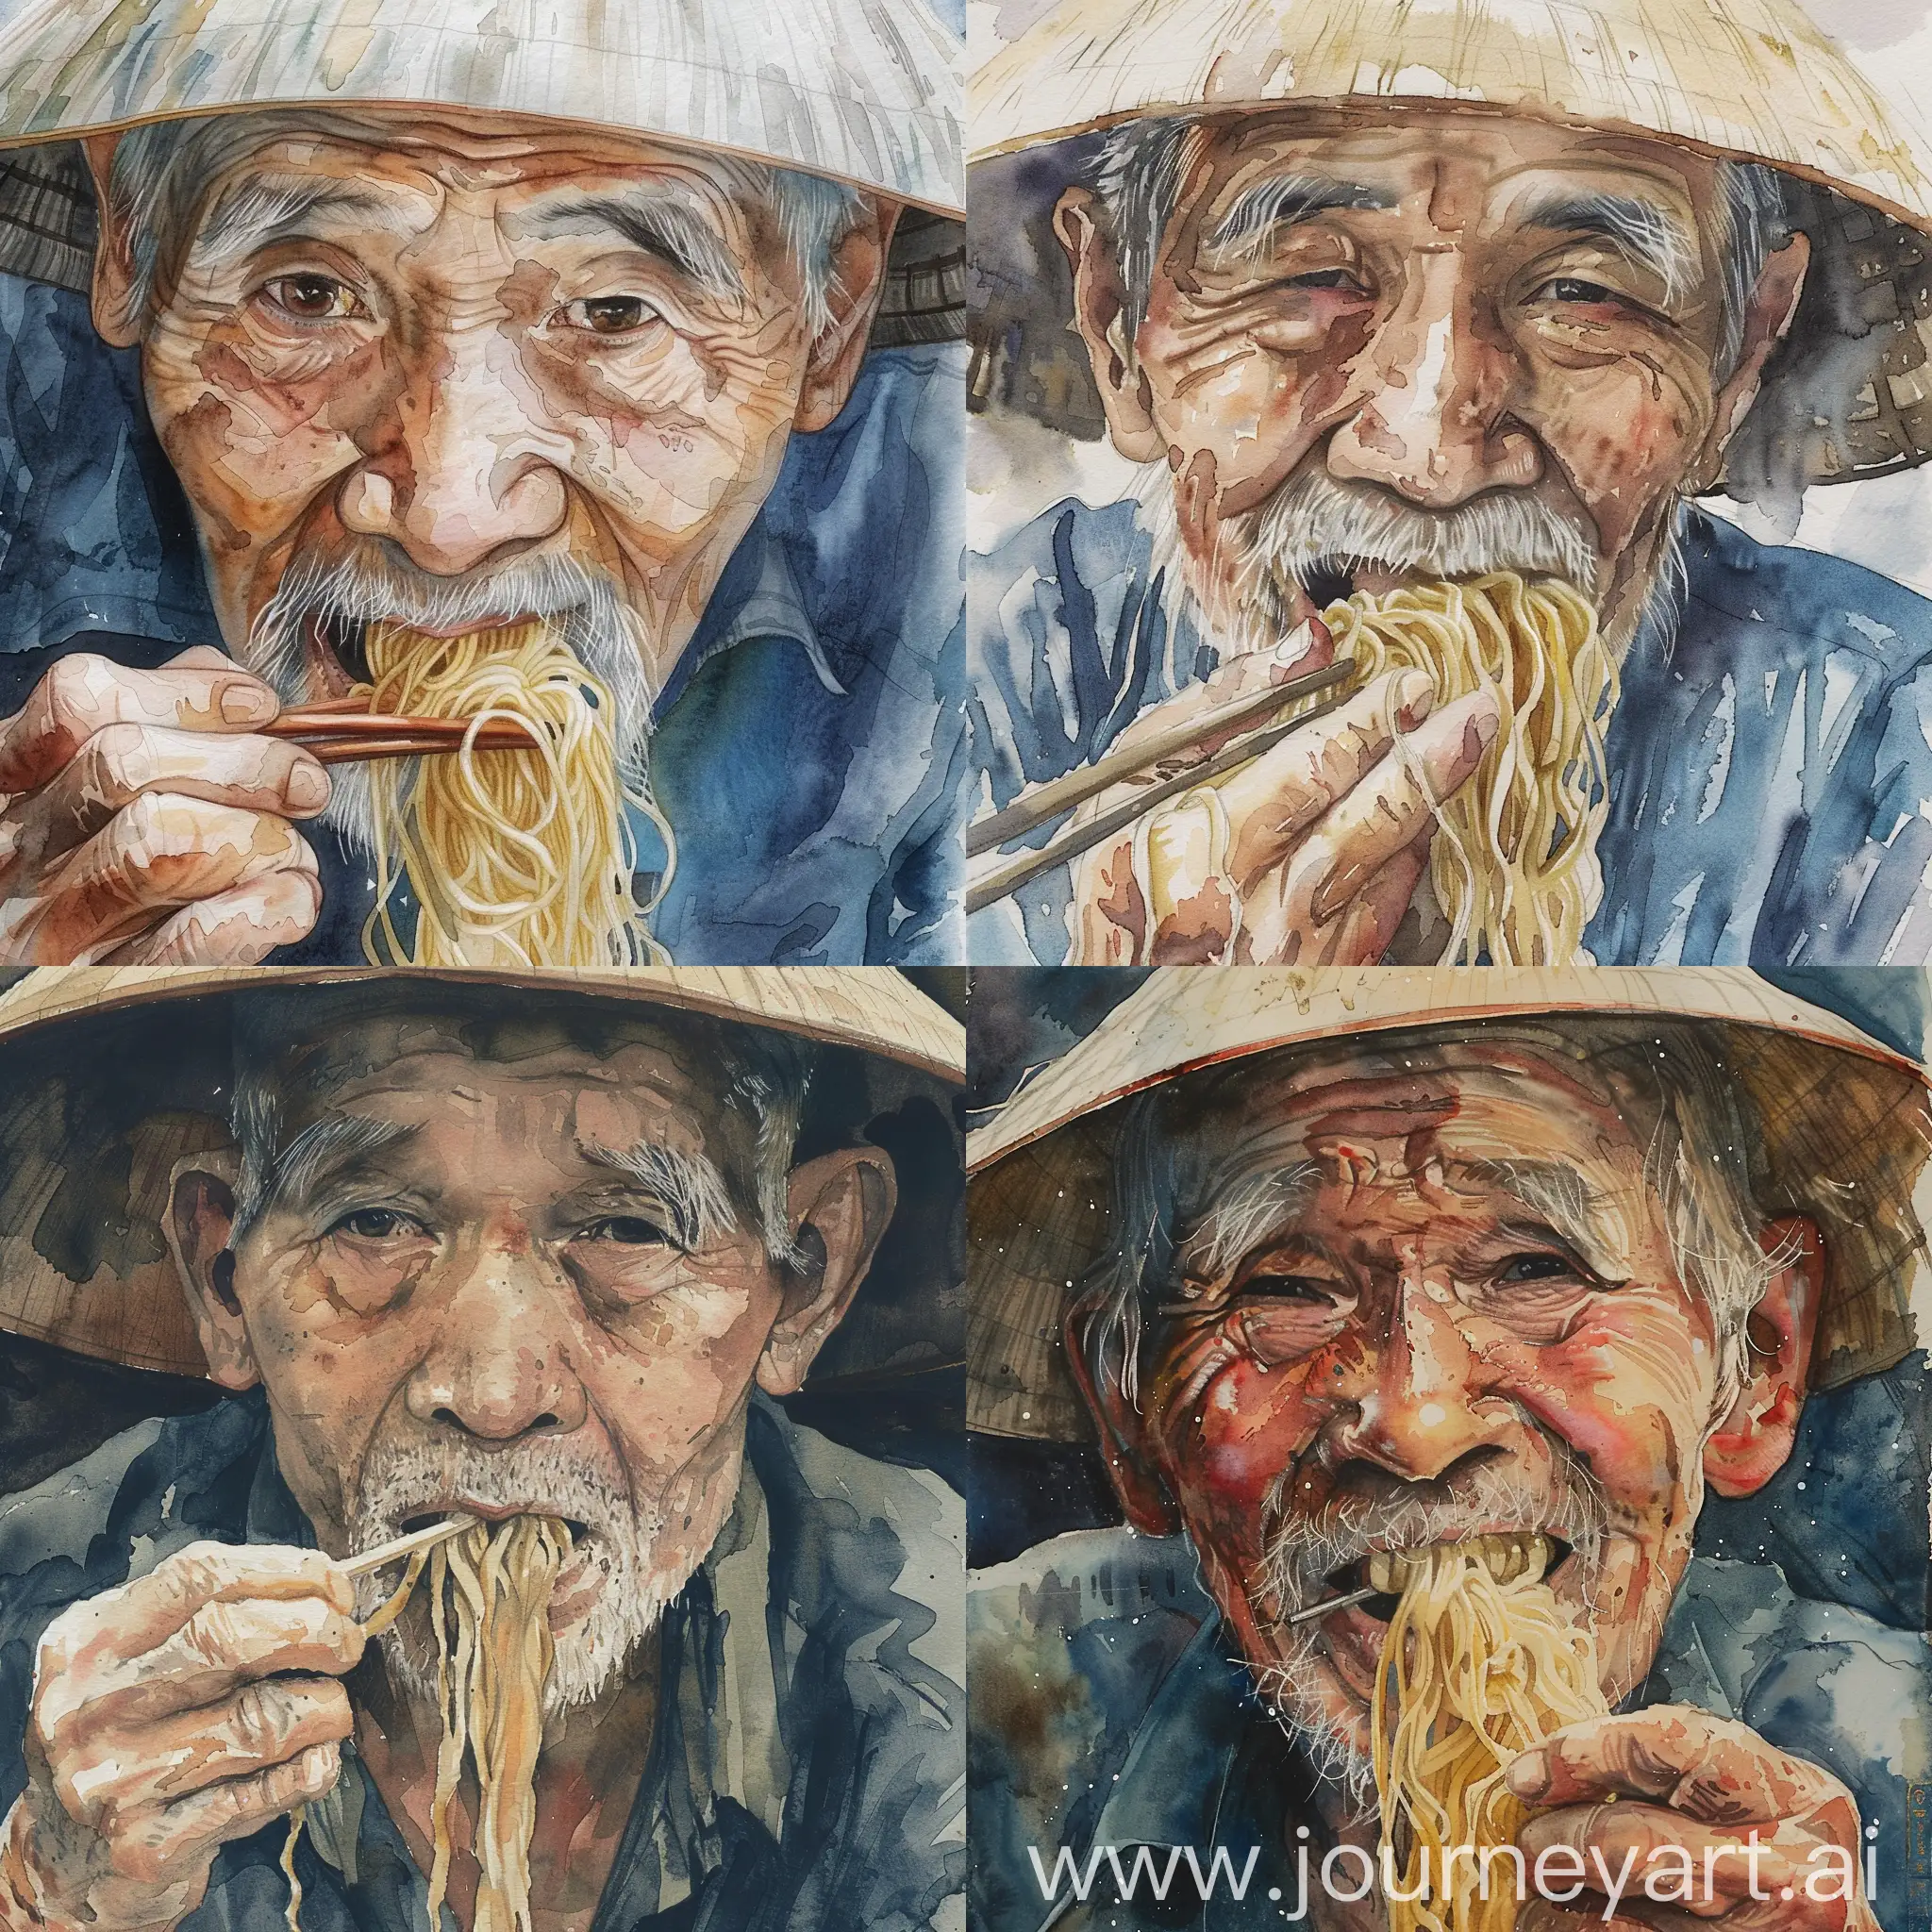 Vietnamese-Elderly-Man-Enjoying-Noodles-Authentic-Watercolor-Illustration